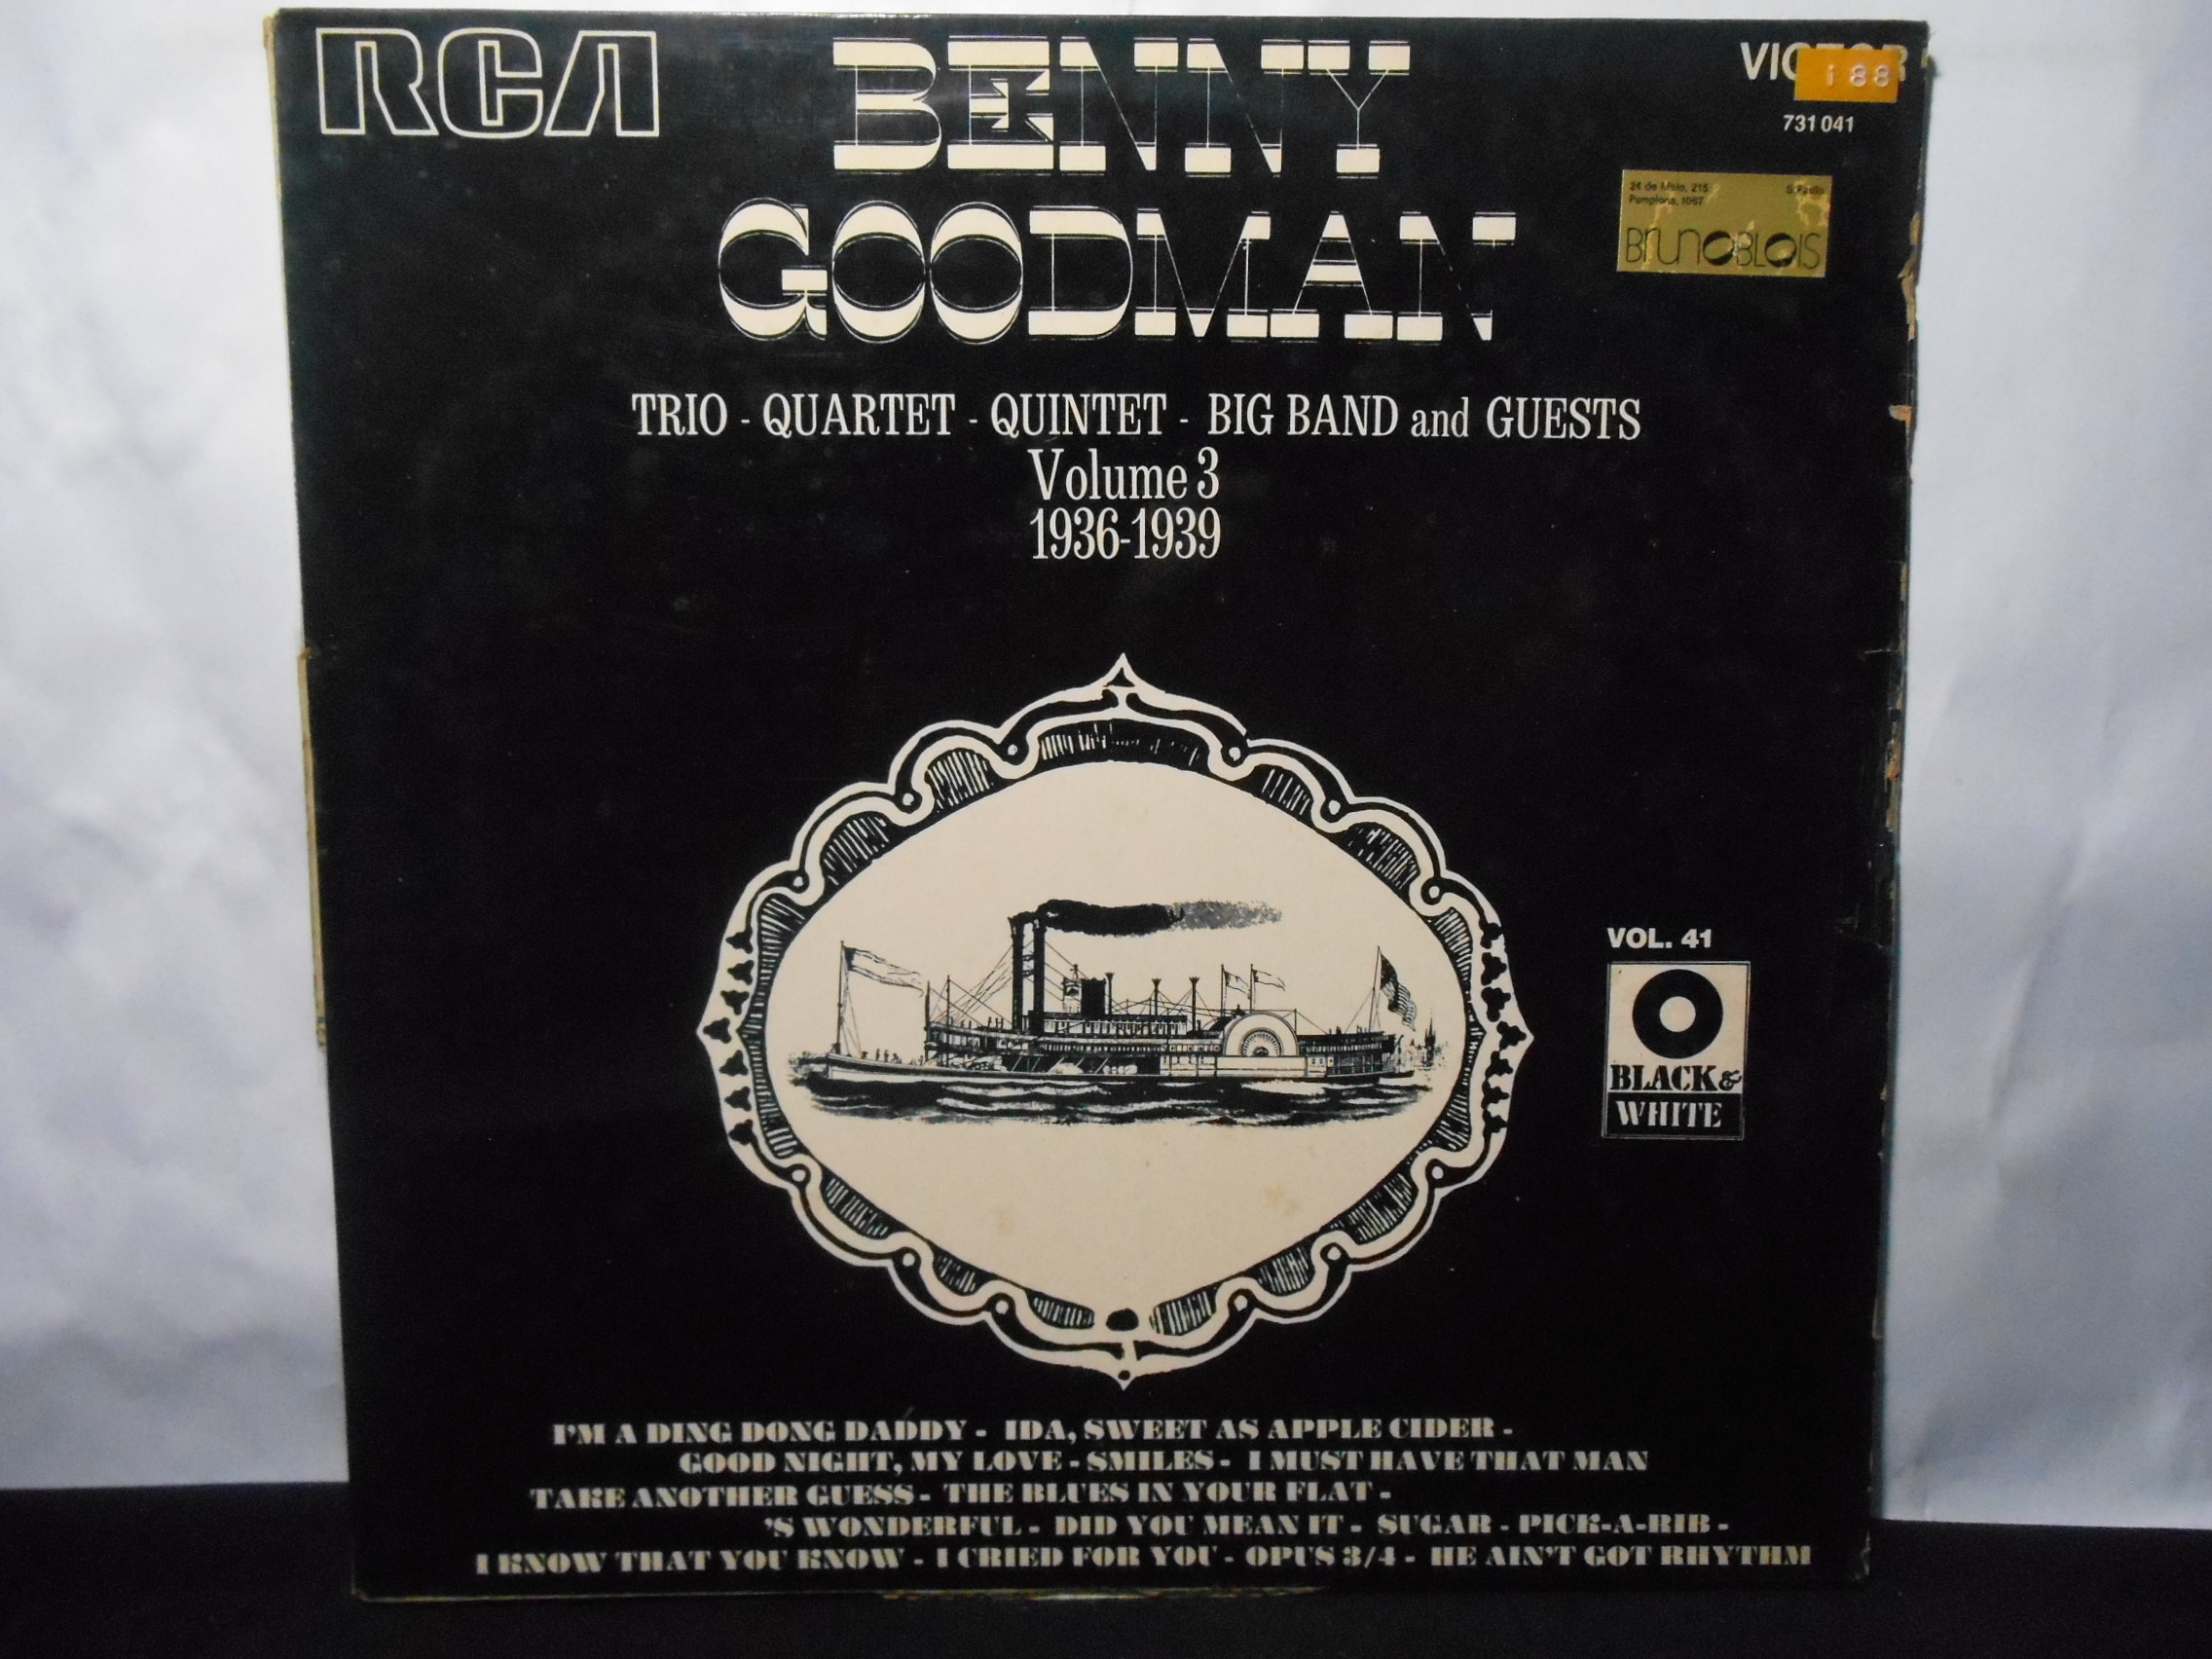 Vinil - Benny Goodman - Trio Quartet Quintet Big Band and Guests Volume 3 1936-1939 (France)